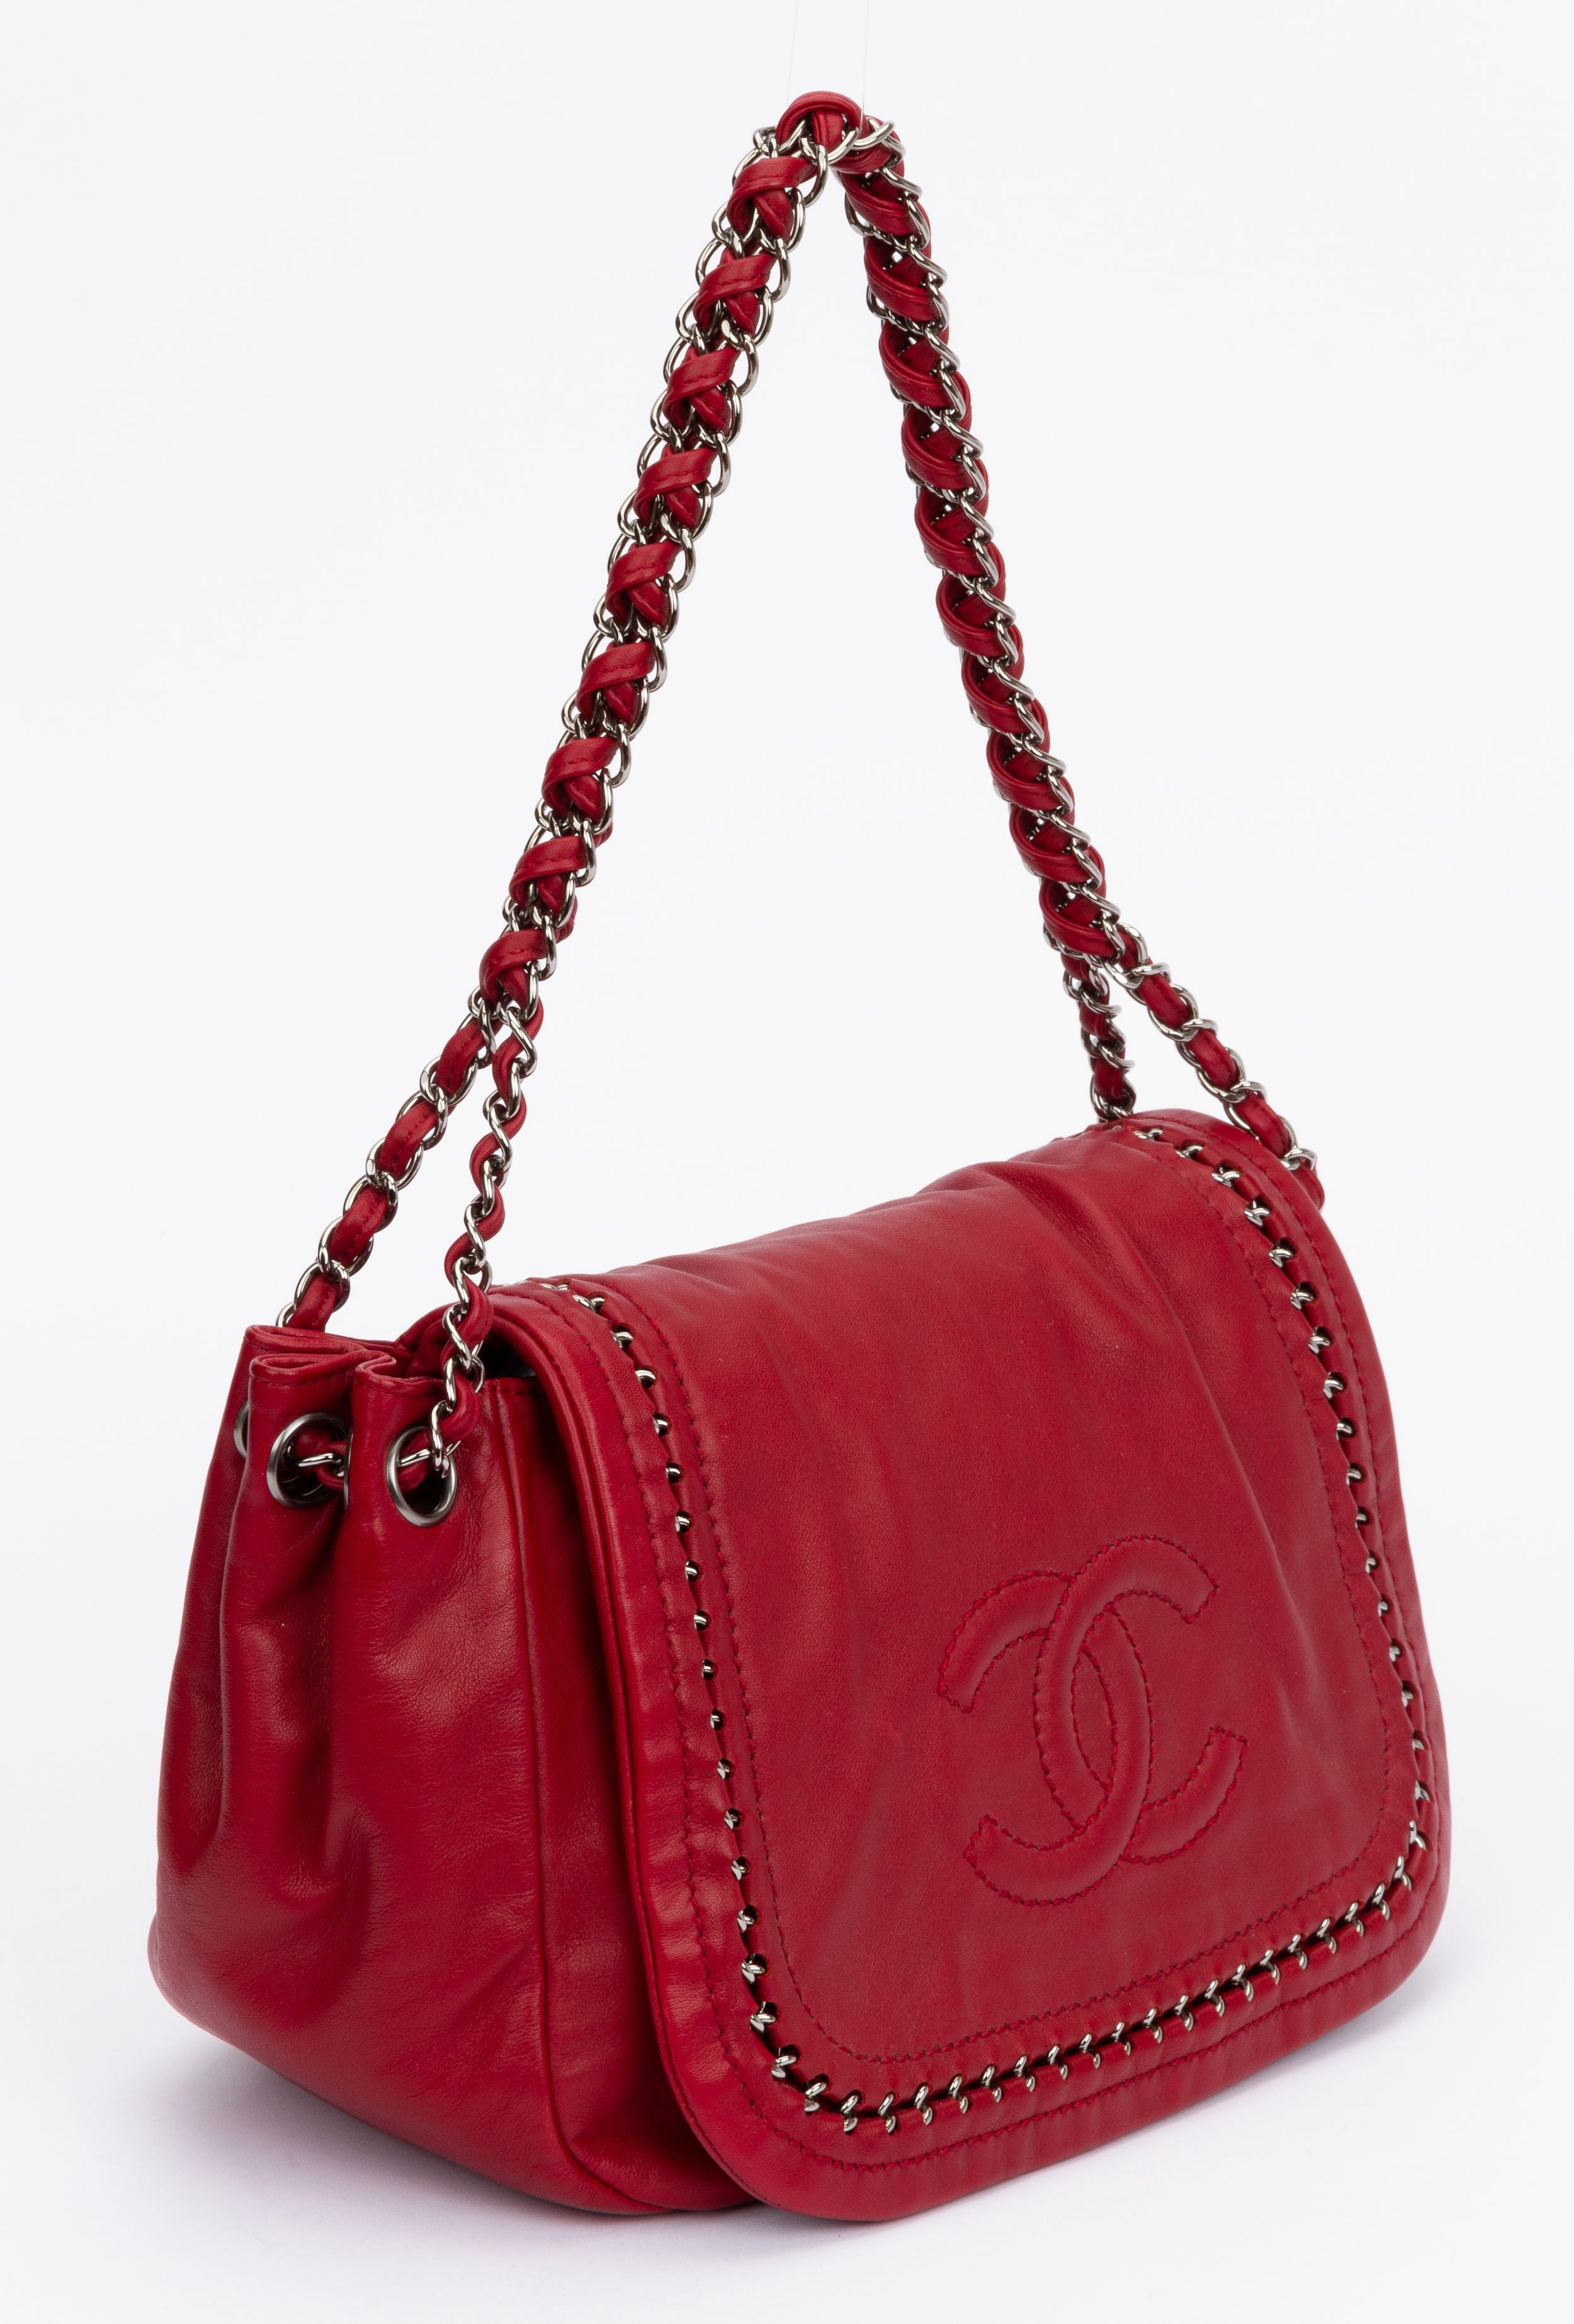 Chanel CC Logo Travel Line Large Nylon Tote Bag Light Pink